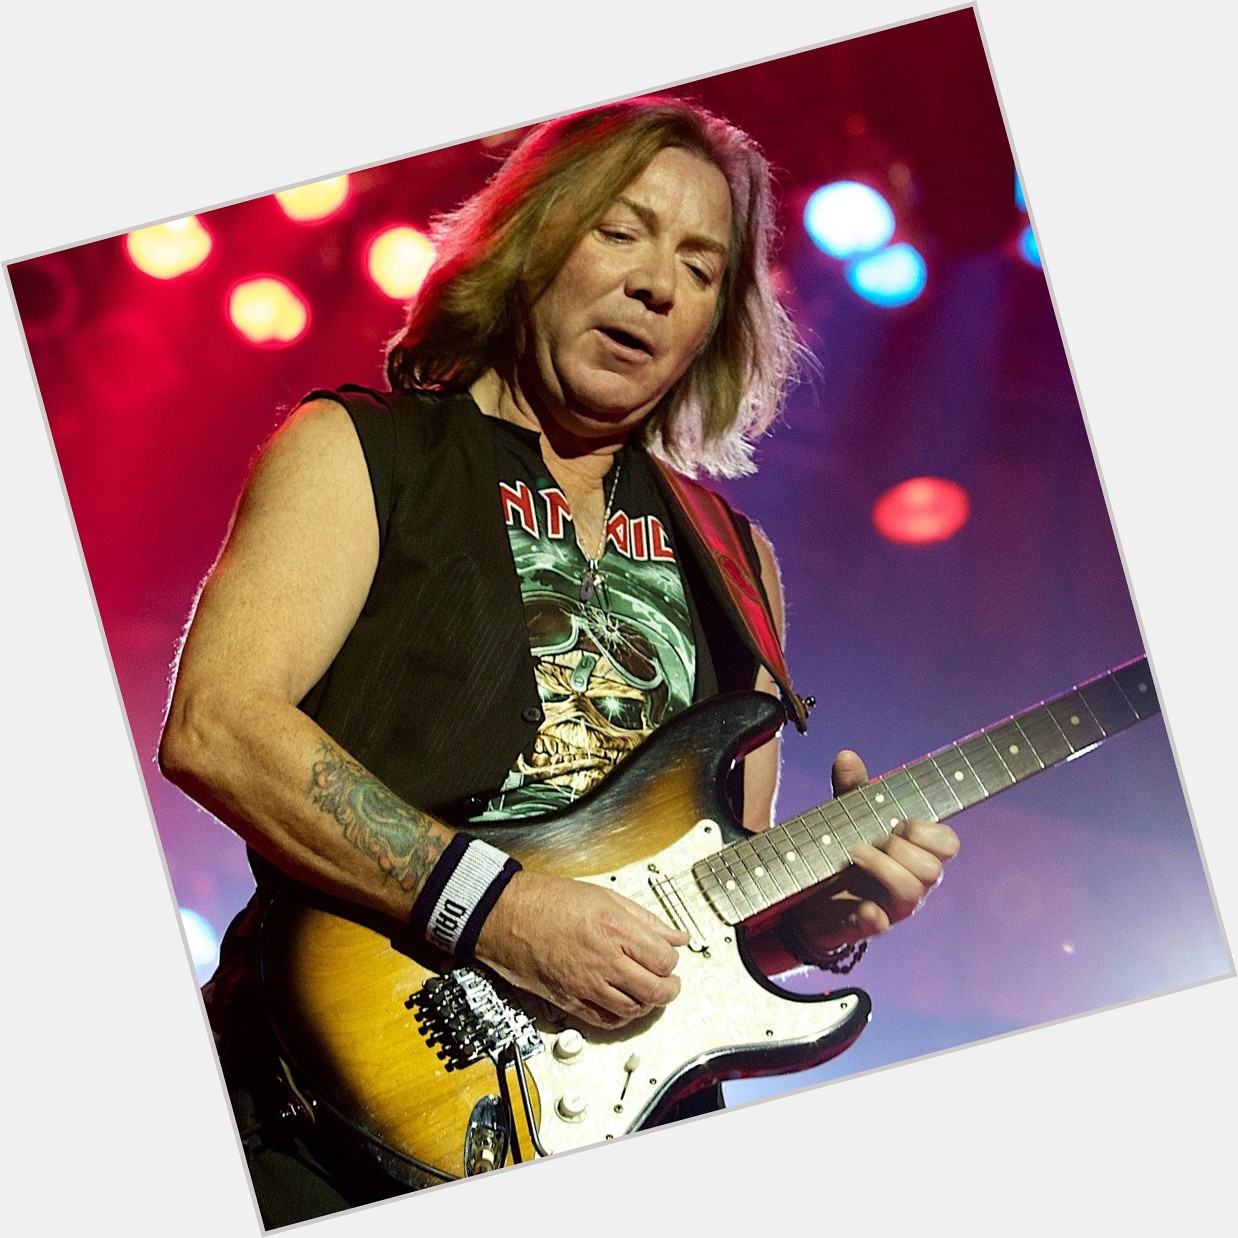 Happy Birthday to Iron Maiden guitarist Dave Murray
on December 23rd. 